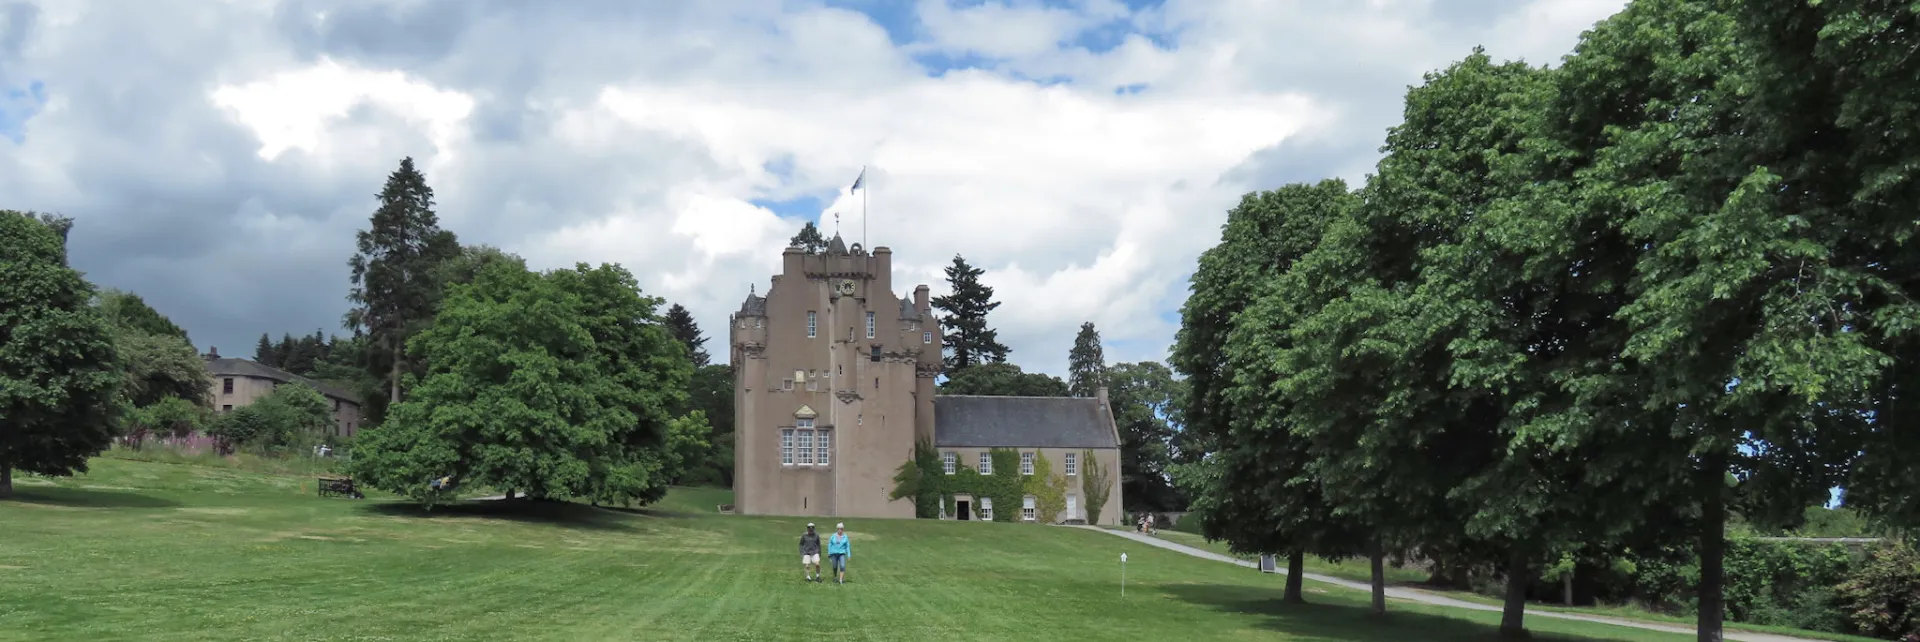 Crathes Castle in Aberdeenshire